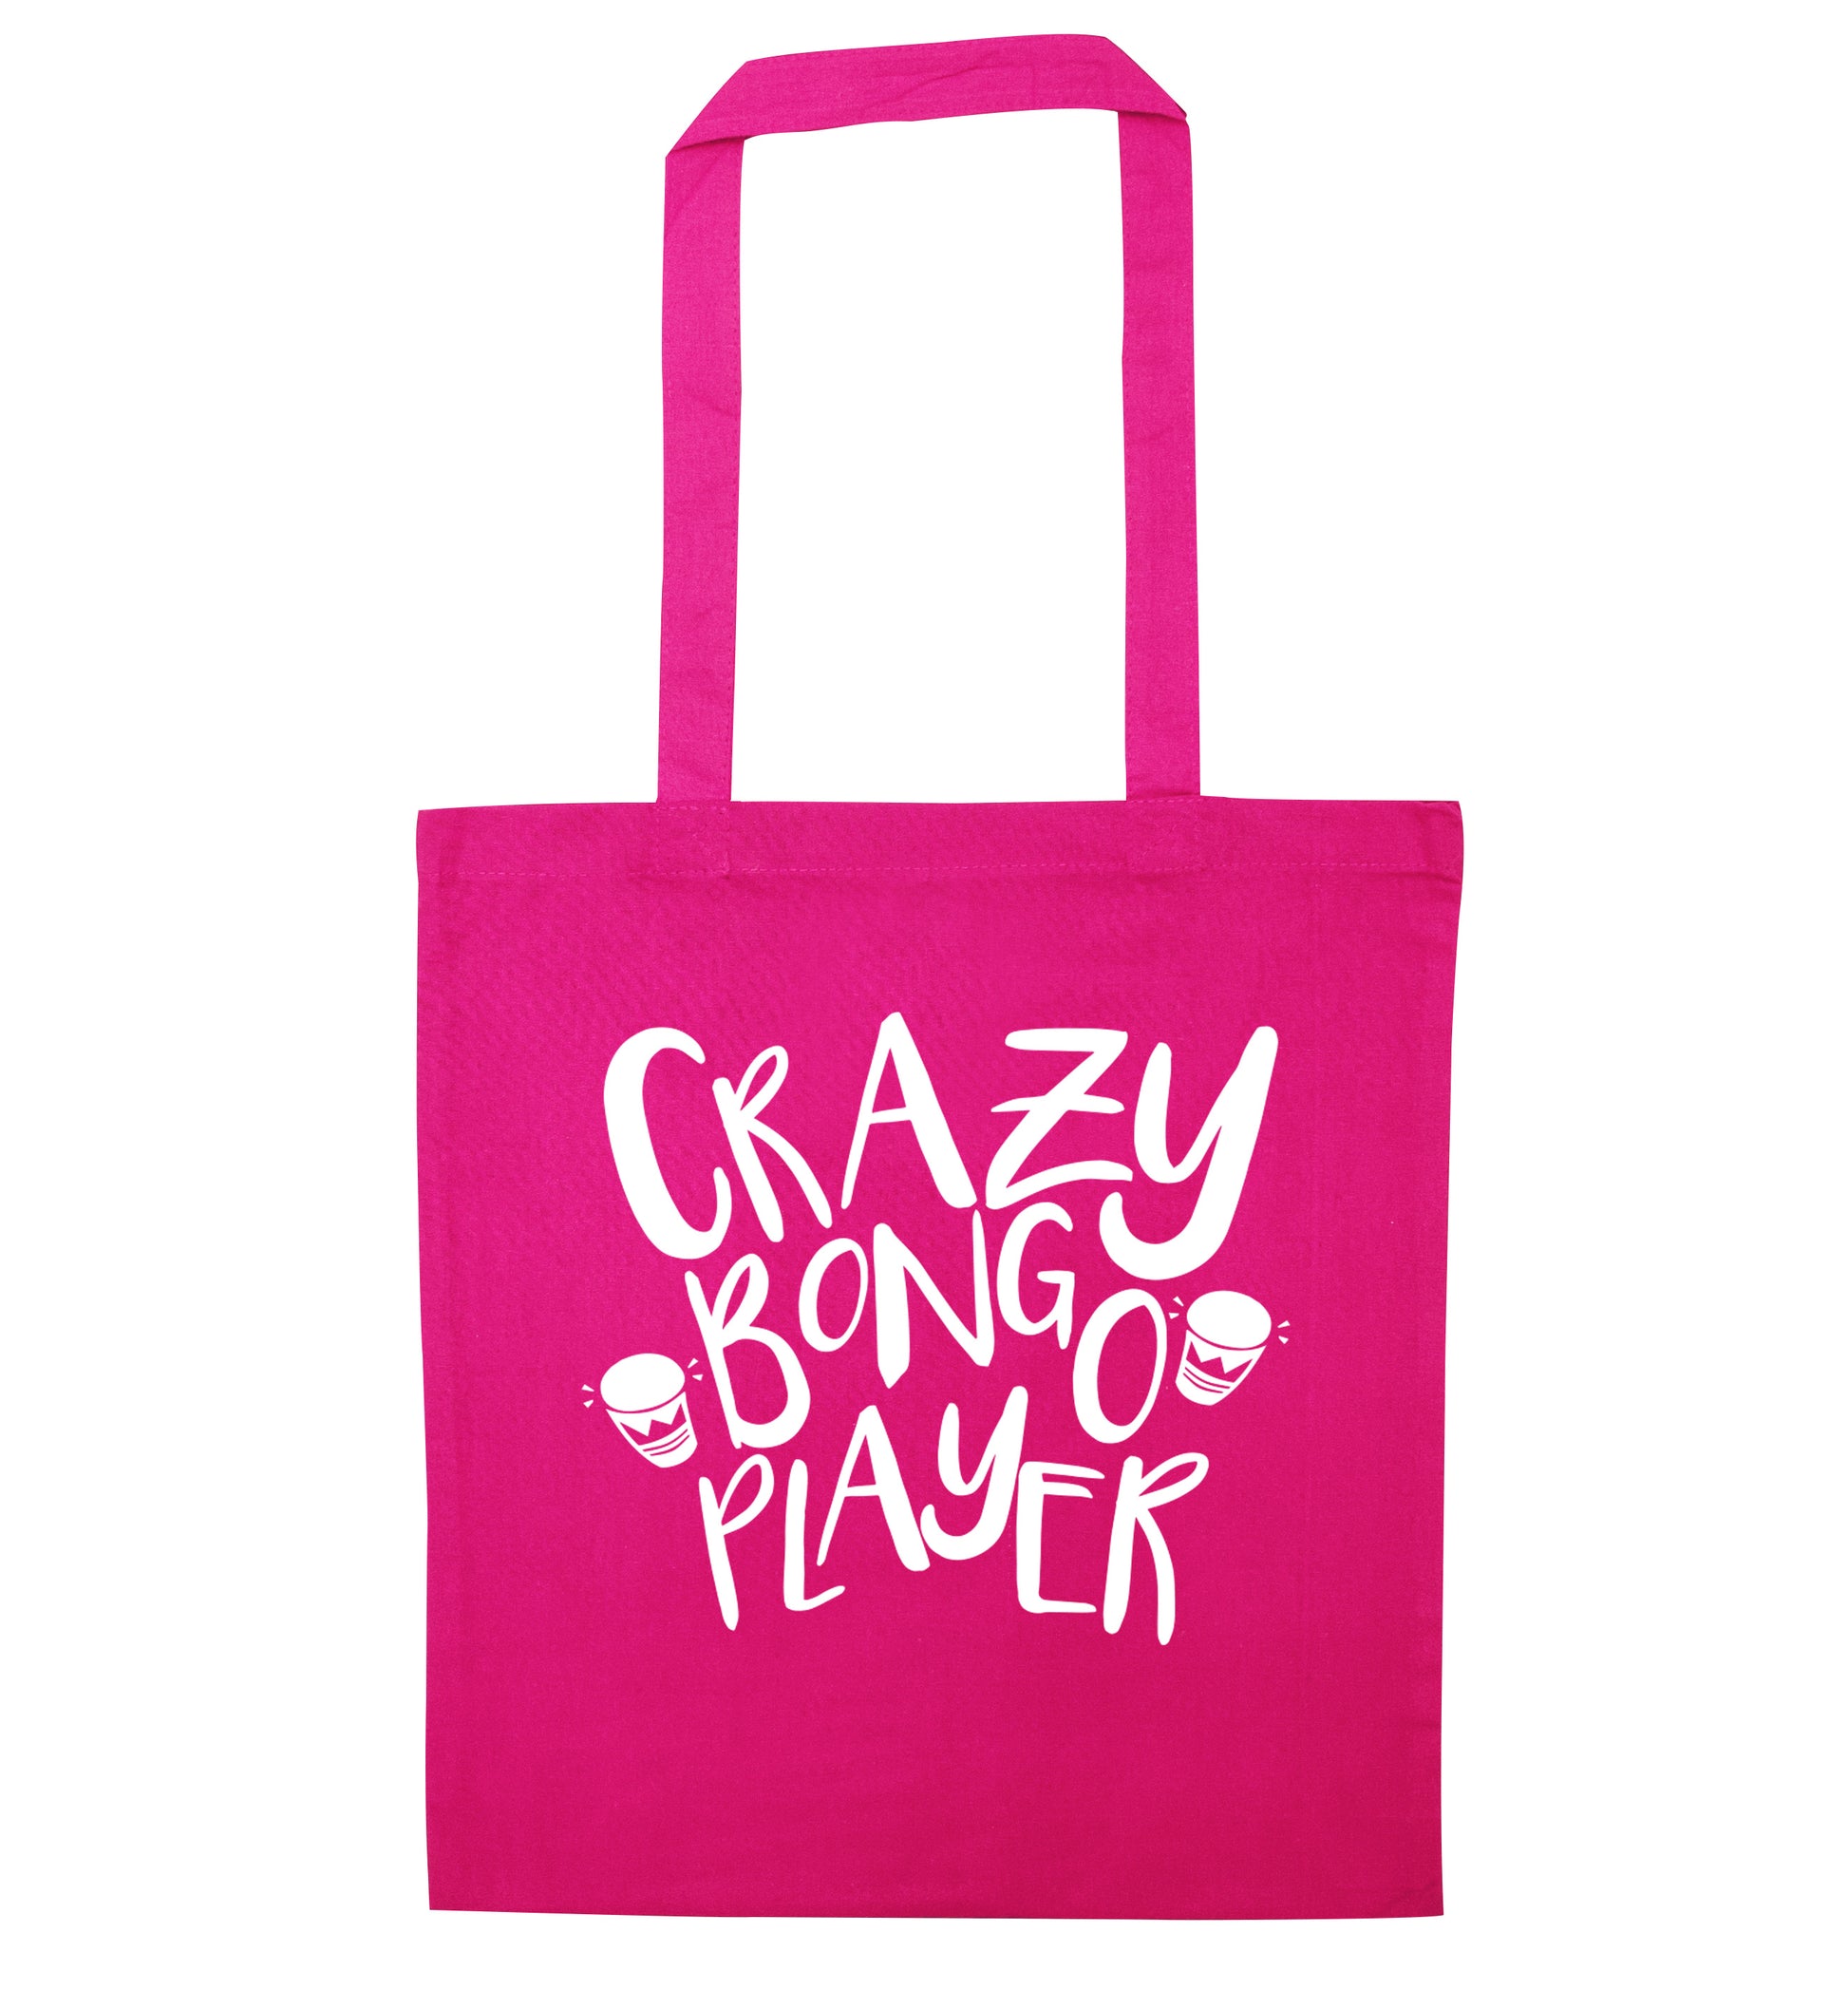 Crazy bongo player pink tote bag